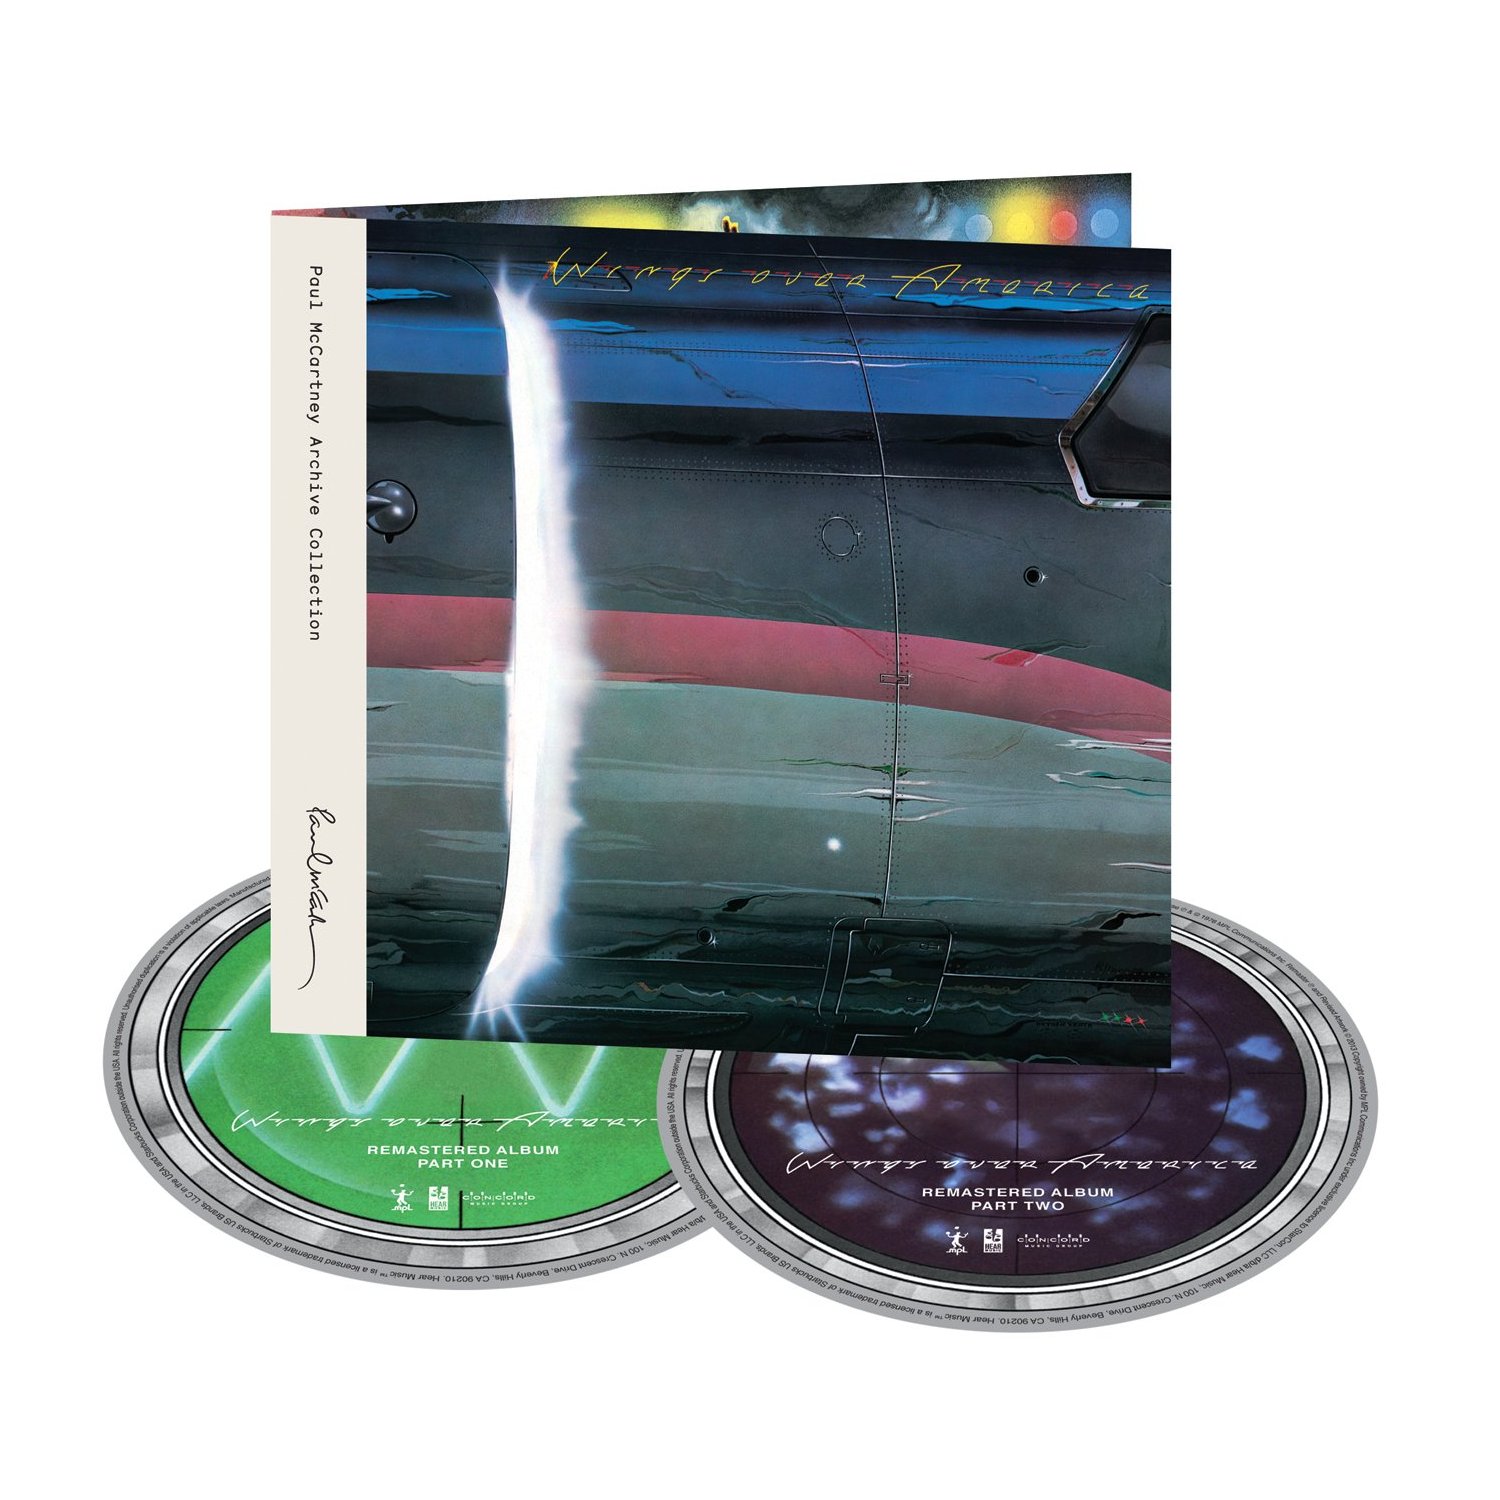 Paul McCartney&Wings - Wings Over America [Deluxe Edition] - 2CD